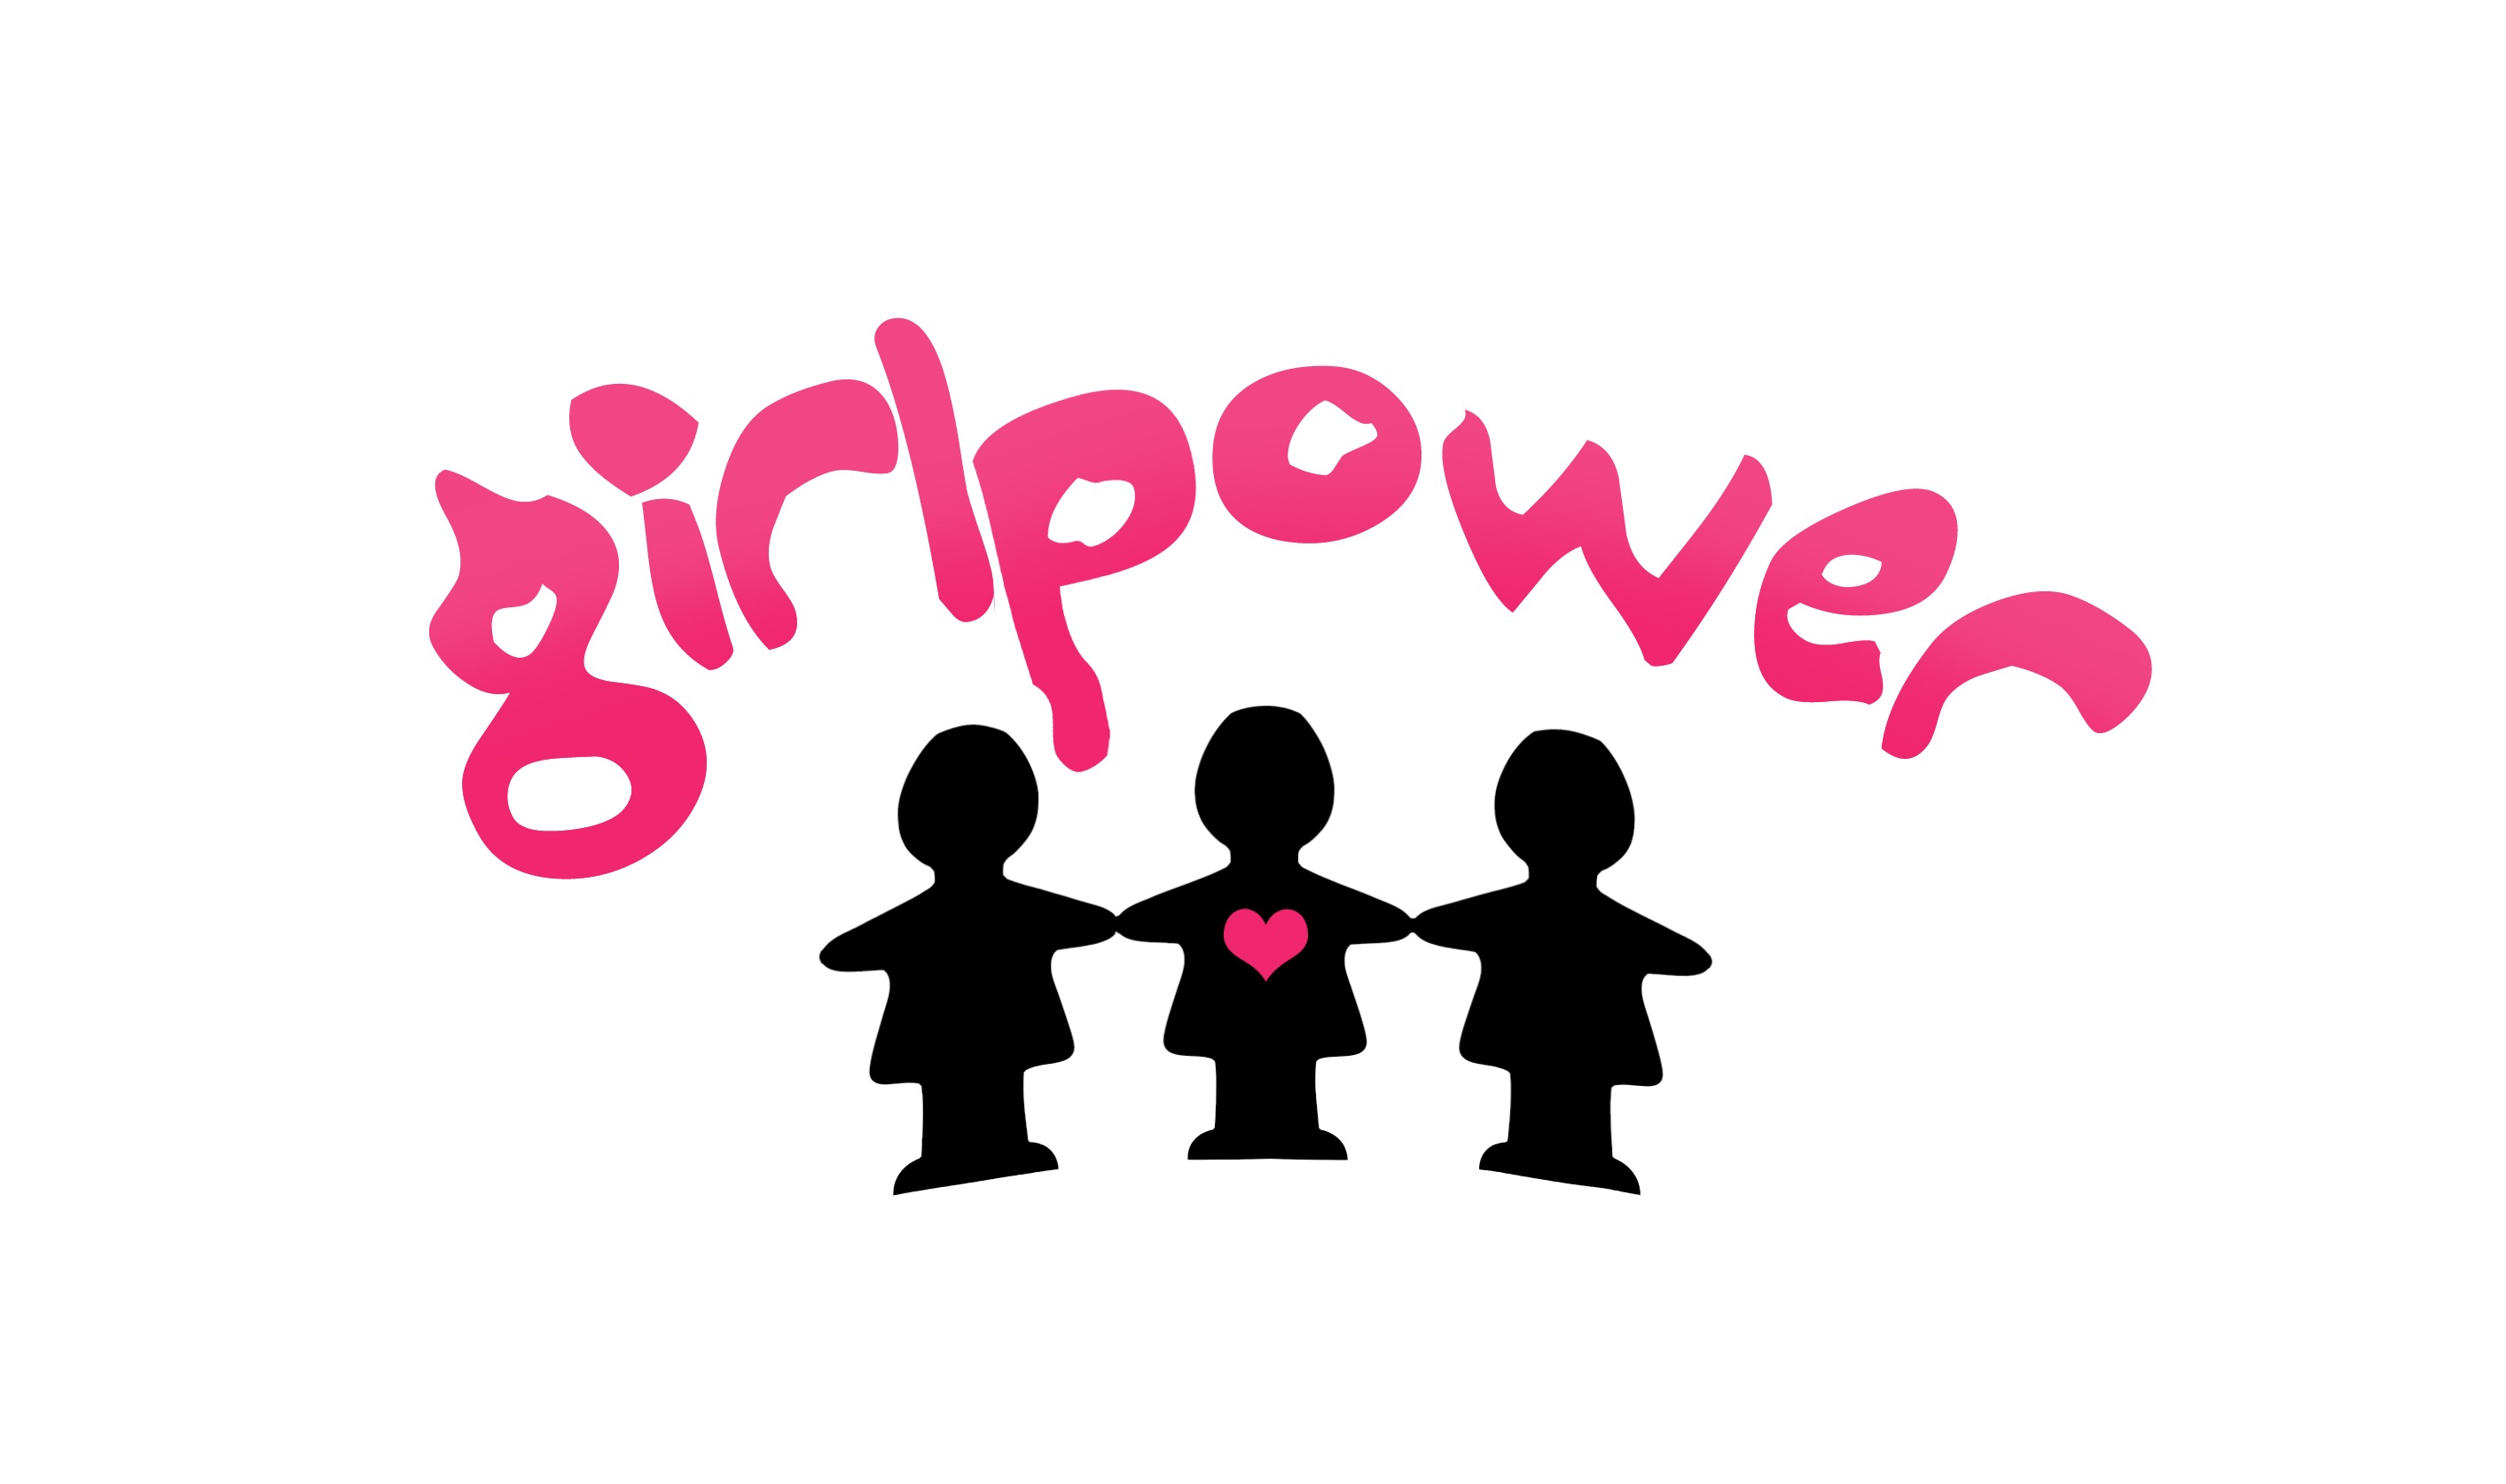 Girl power photo